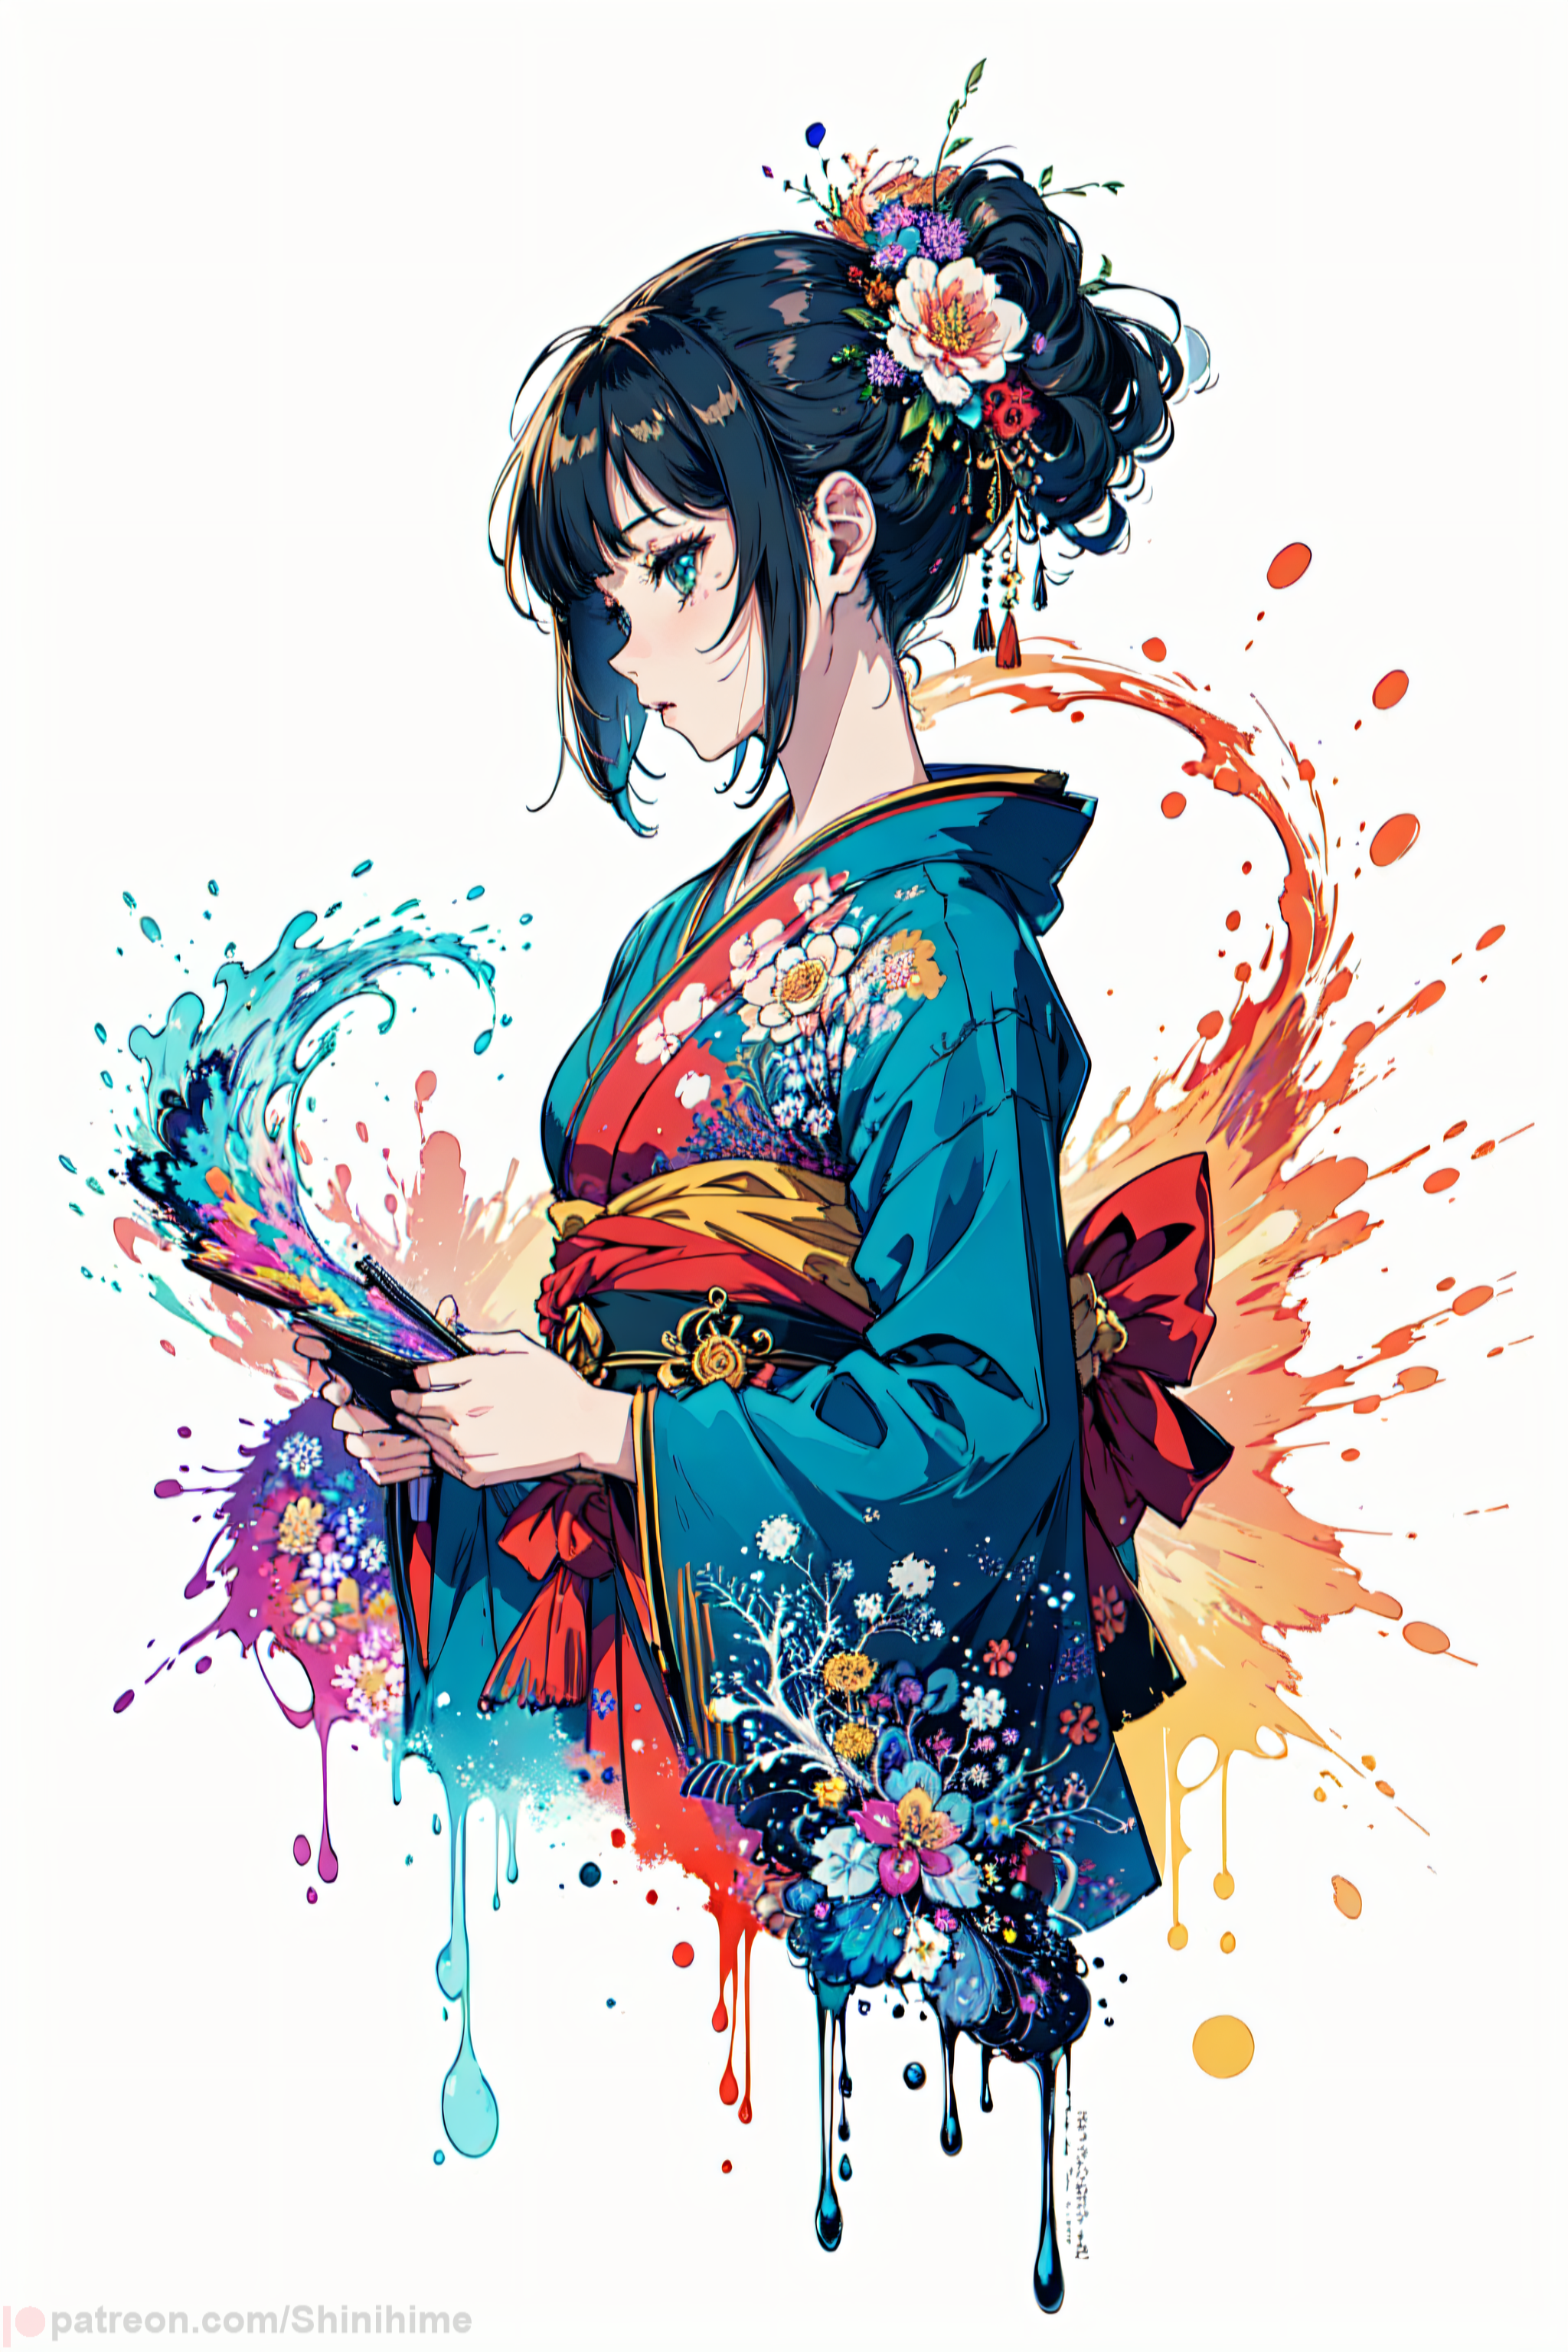 Waifus wearing kimono